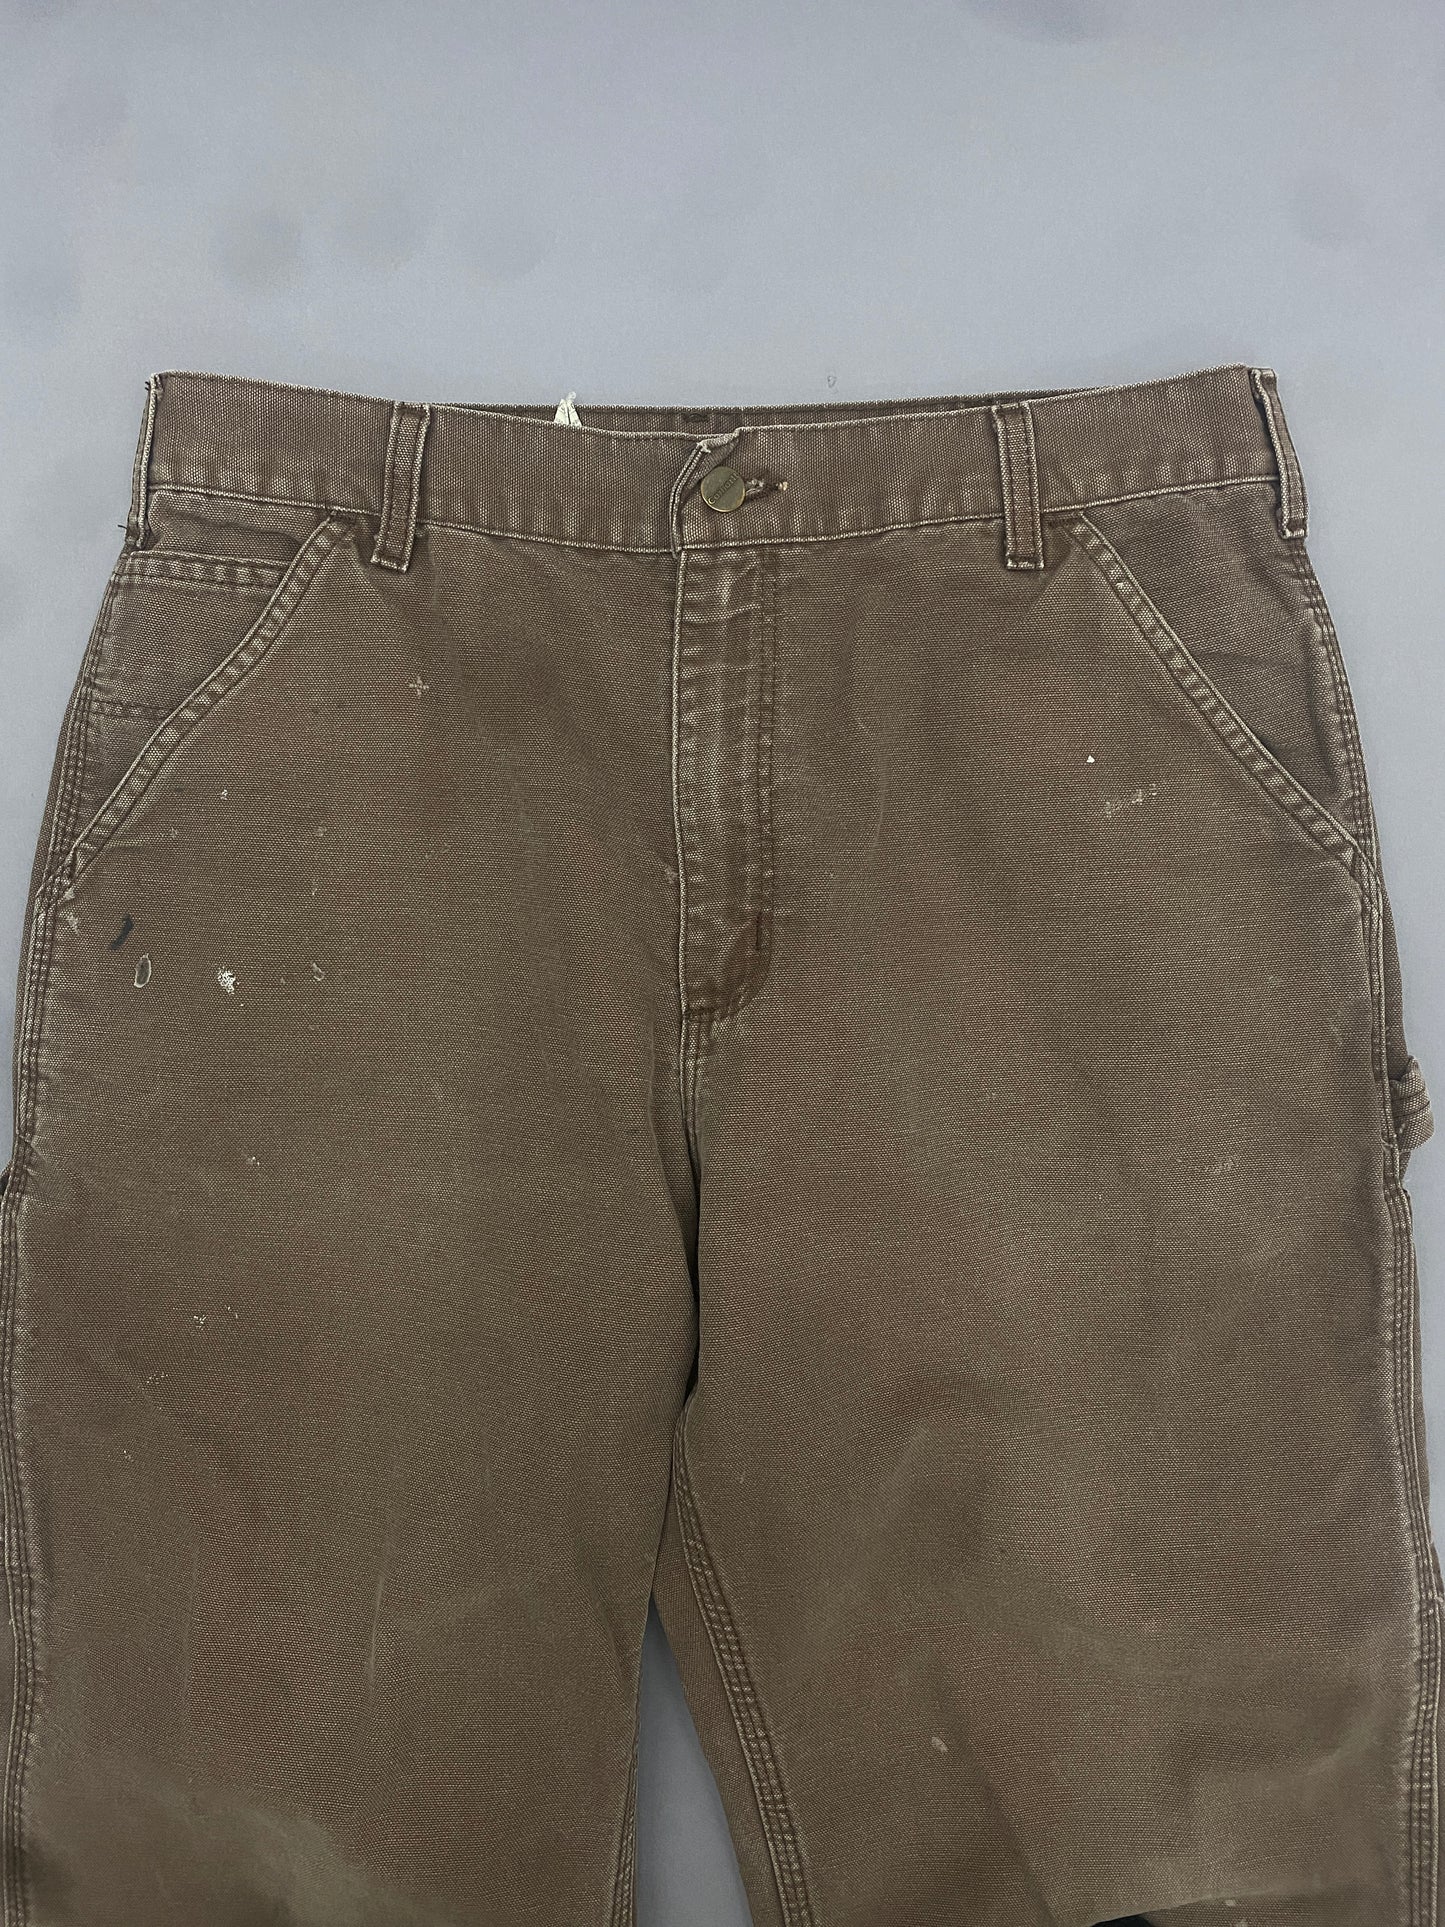 Carhartt Carpenter Vintage Pants - 34 x 30